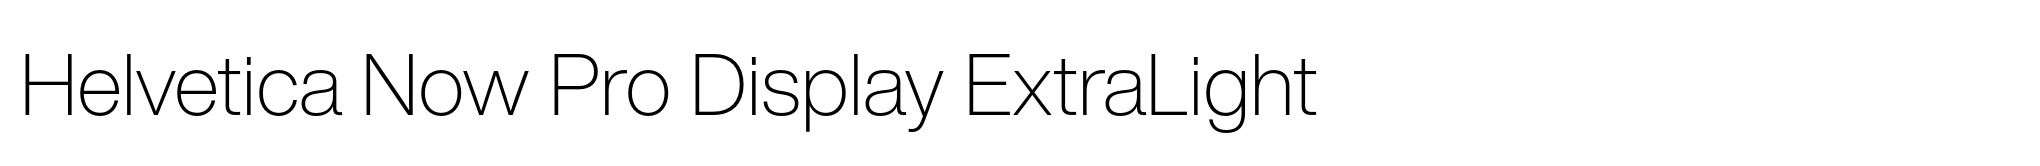 Helvetica Now Pro Display ExtraLight image